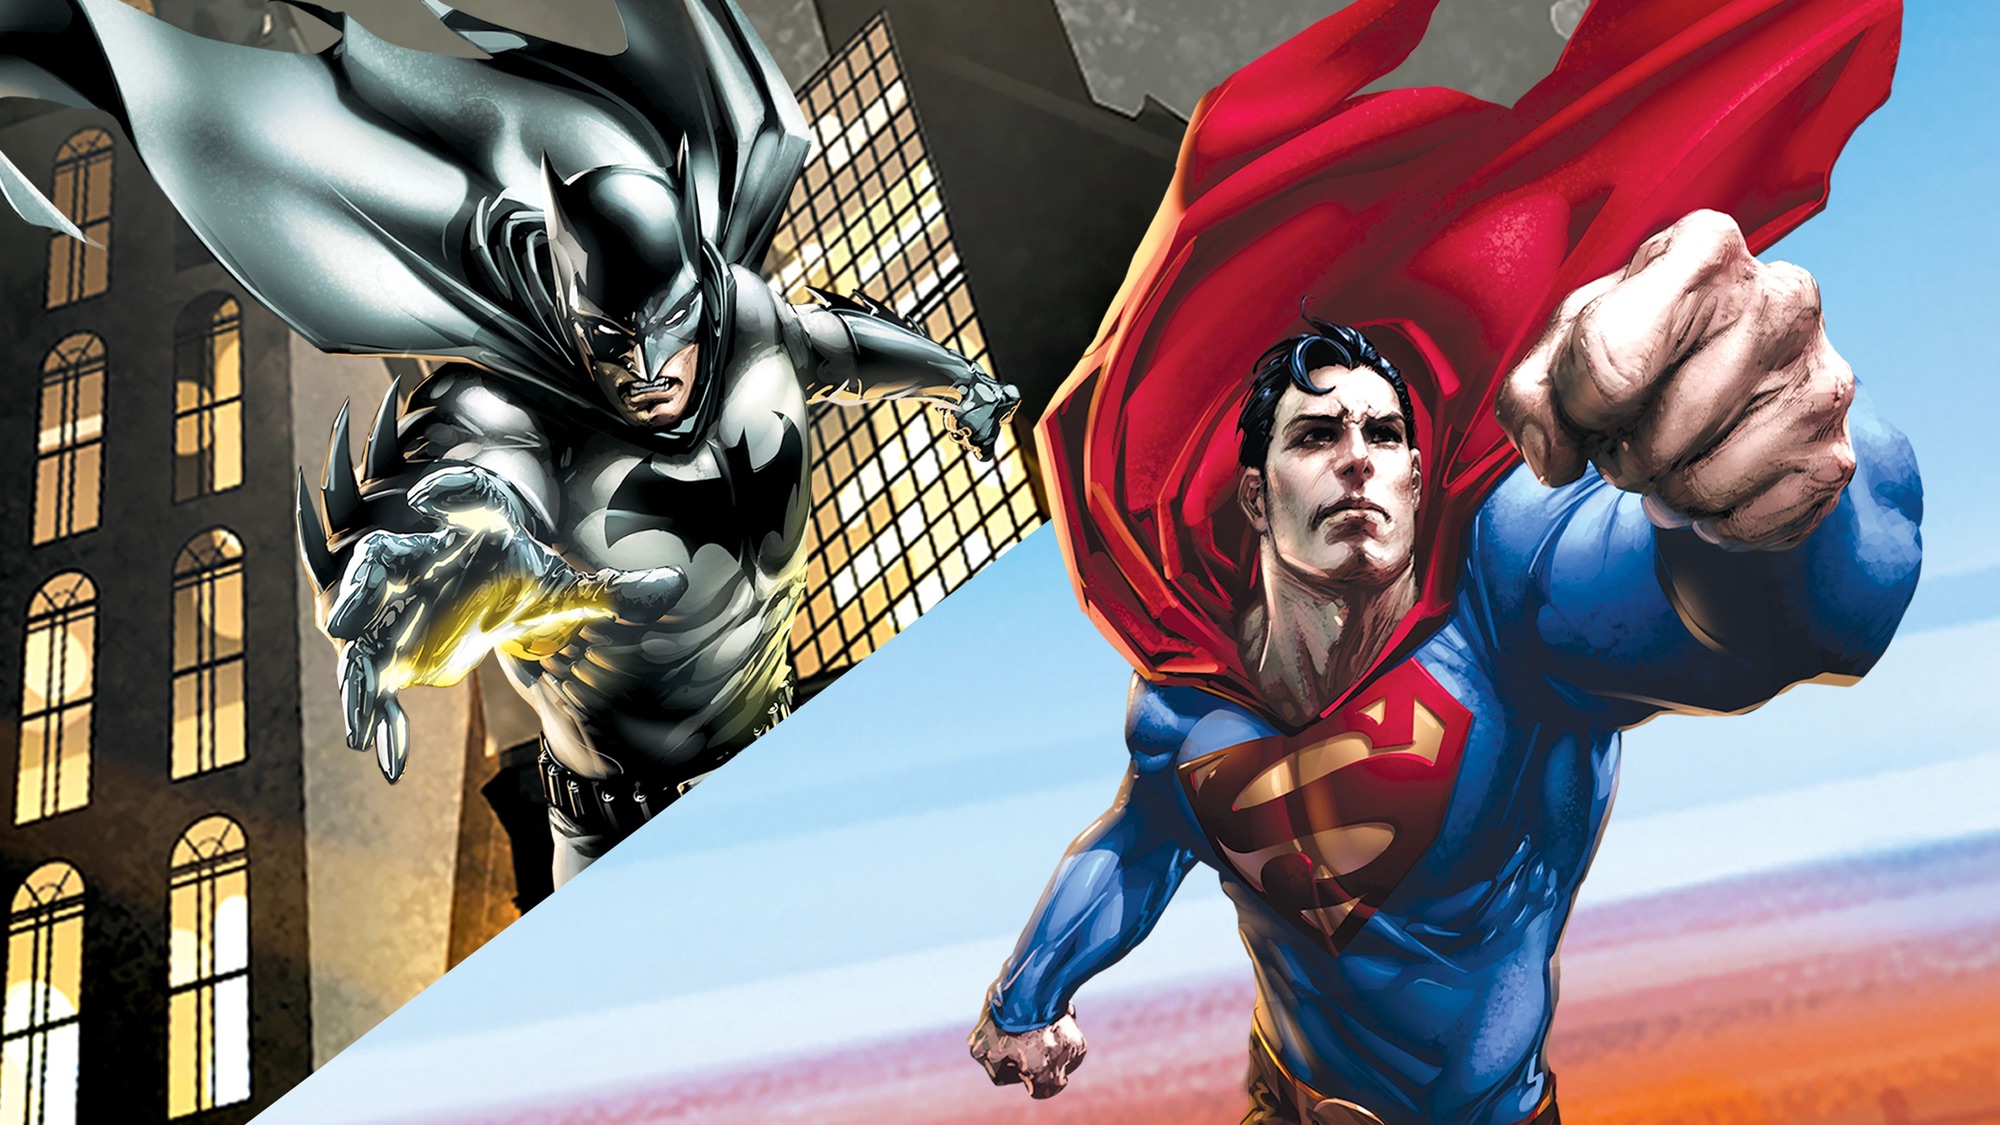 Superman Vs Batman 4k Art HD Superheroes 4k Wallpapers Images  Backgrounds Photos and Pictures